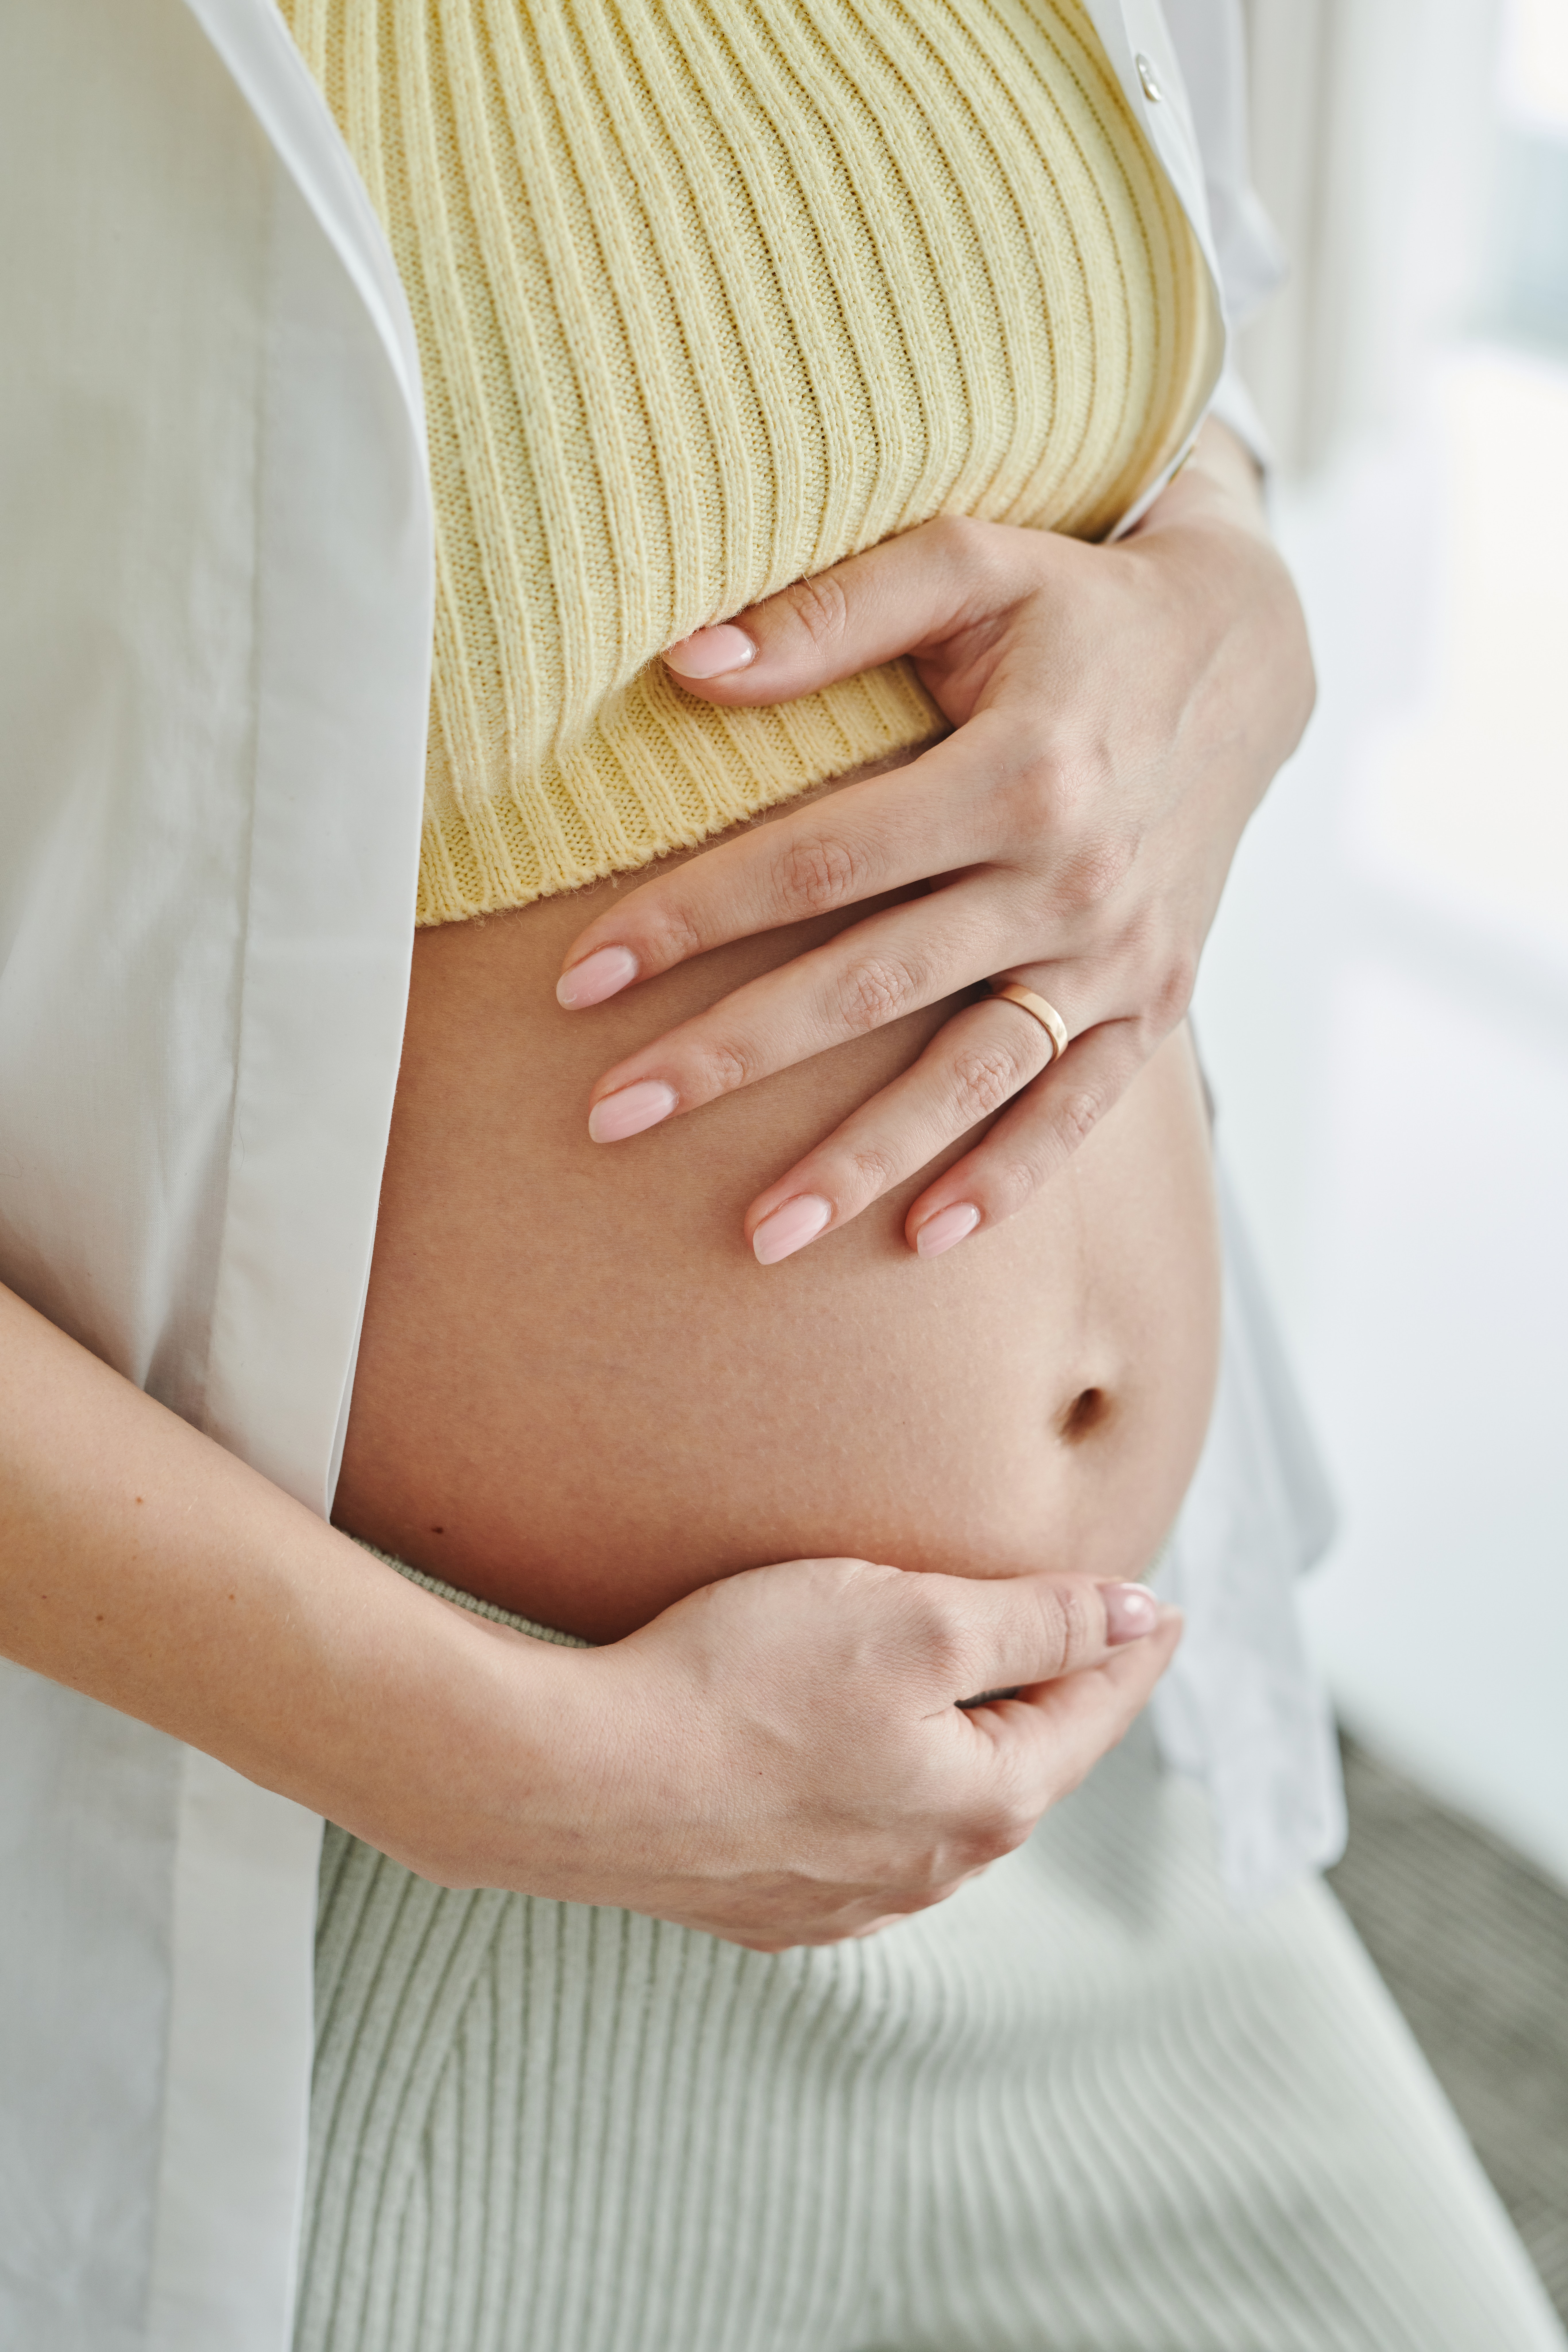 Massage femme enceinte - bébé - grossesse